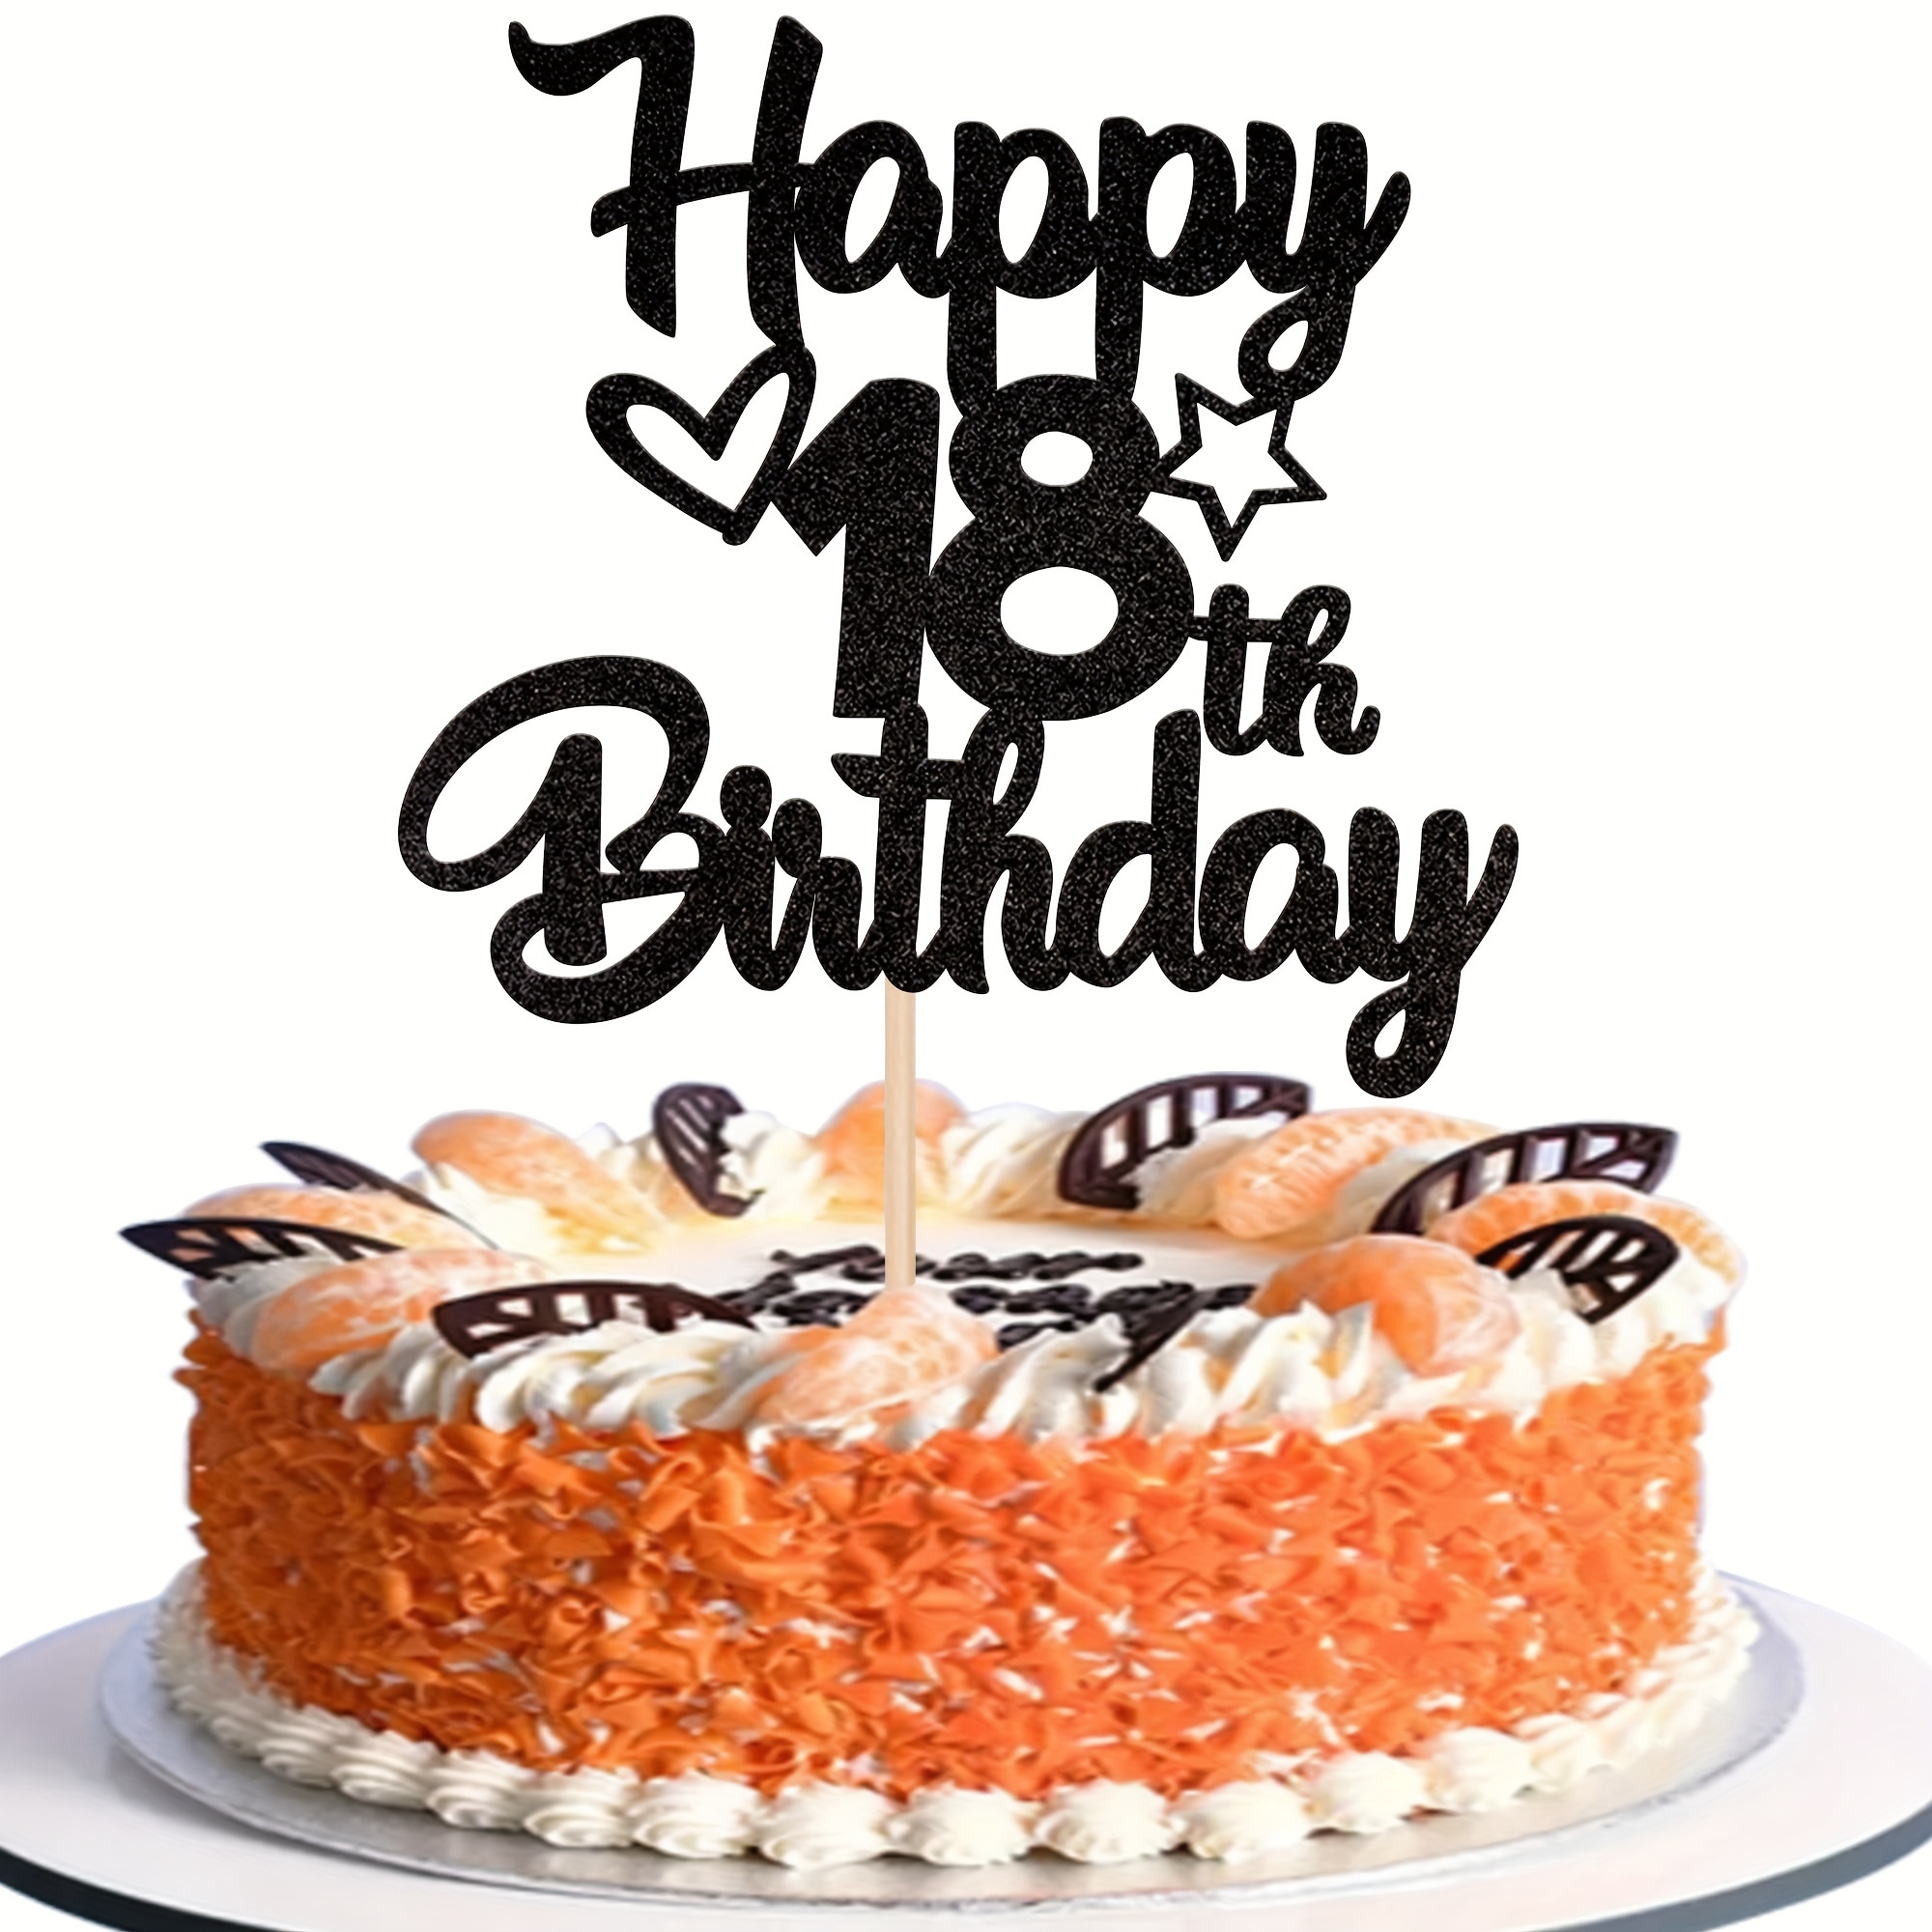 

1pc Black Glitter Birthday Cake Insert, For Birthday Cake Decoration, Party Supplies